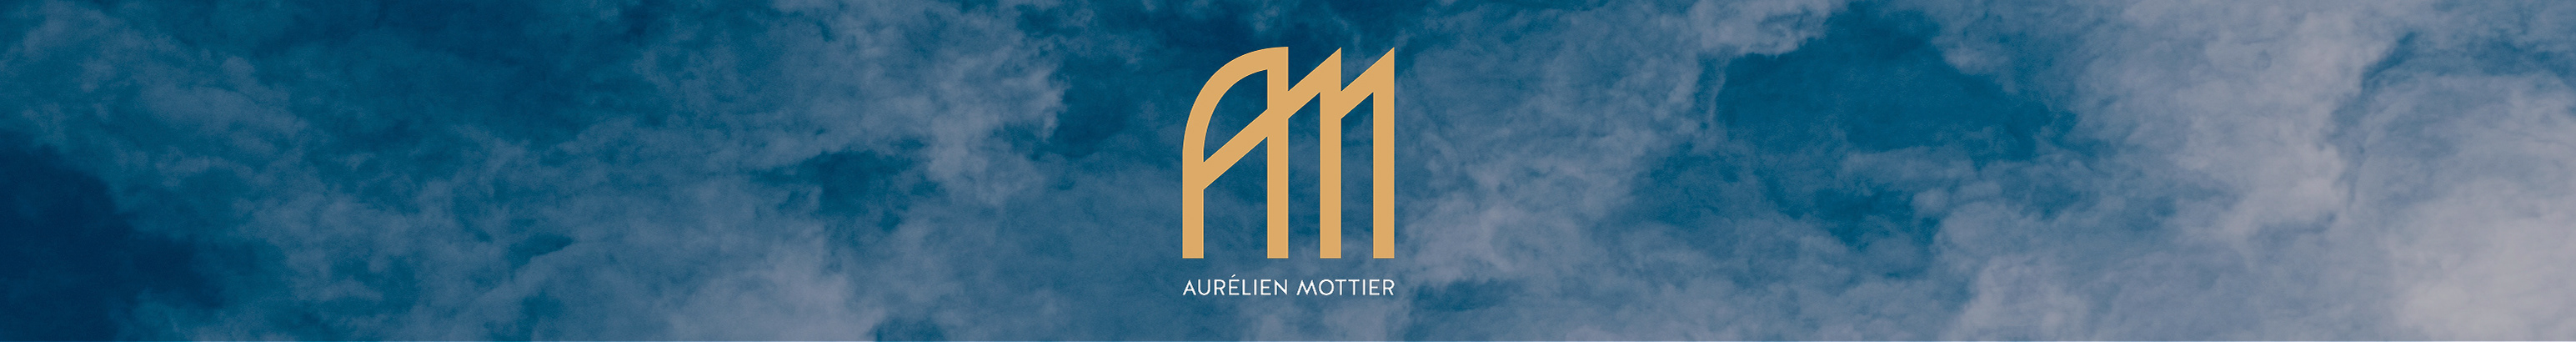 Banner profilu uživatele Aurélien Mottier